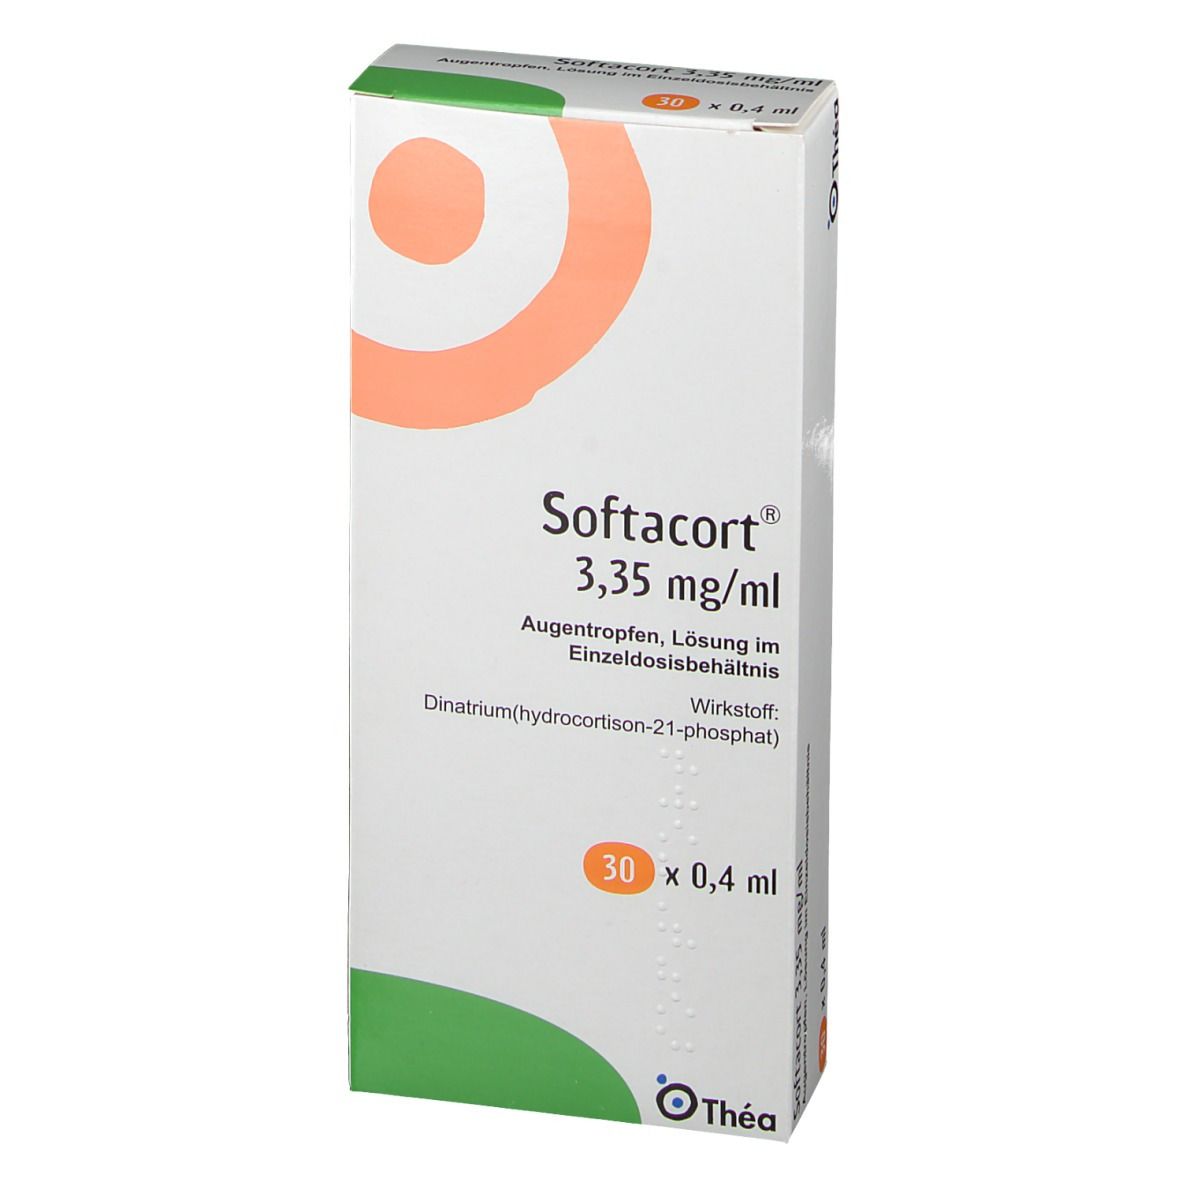 Softacort® 3,35 mg/ml